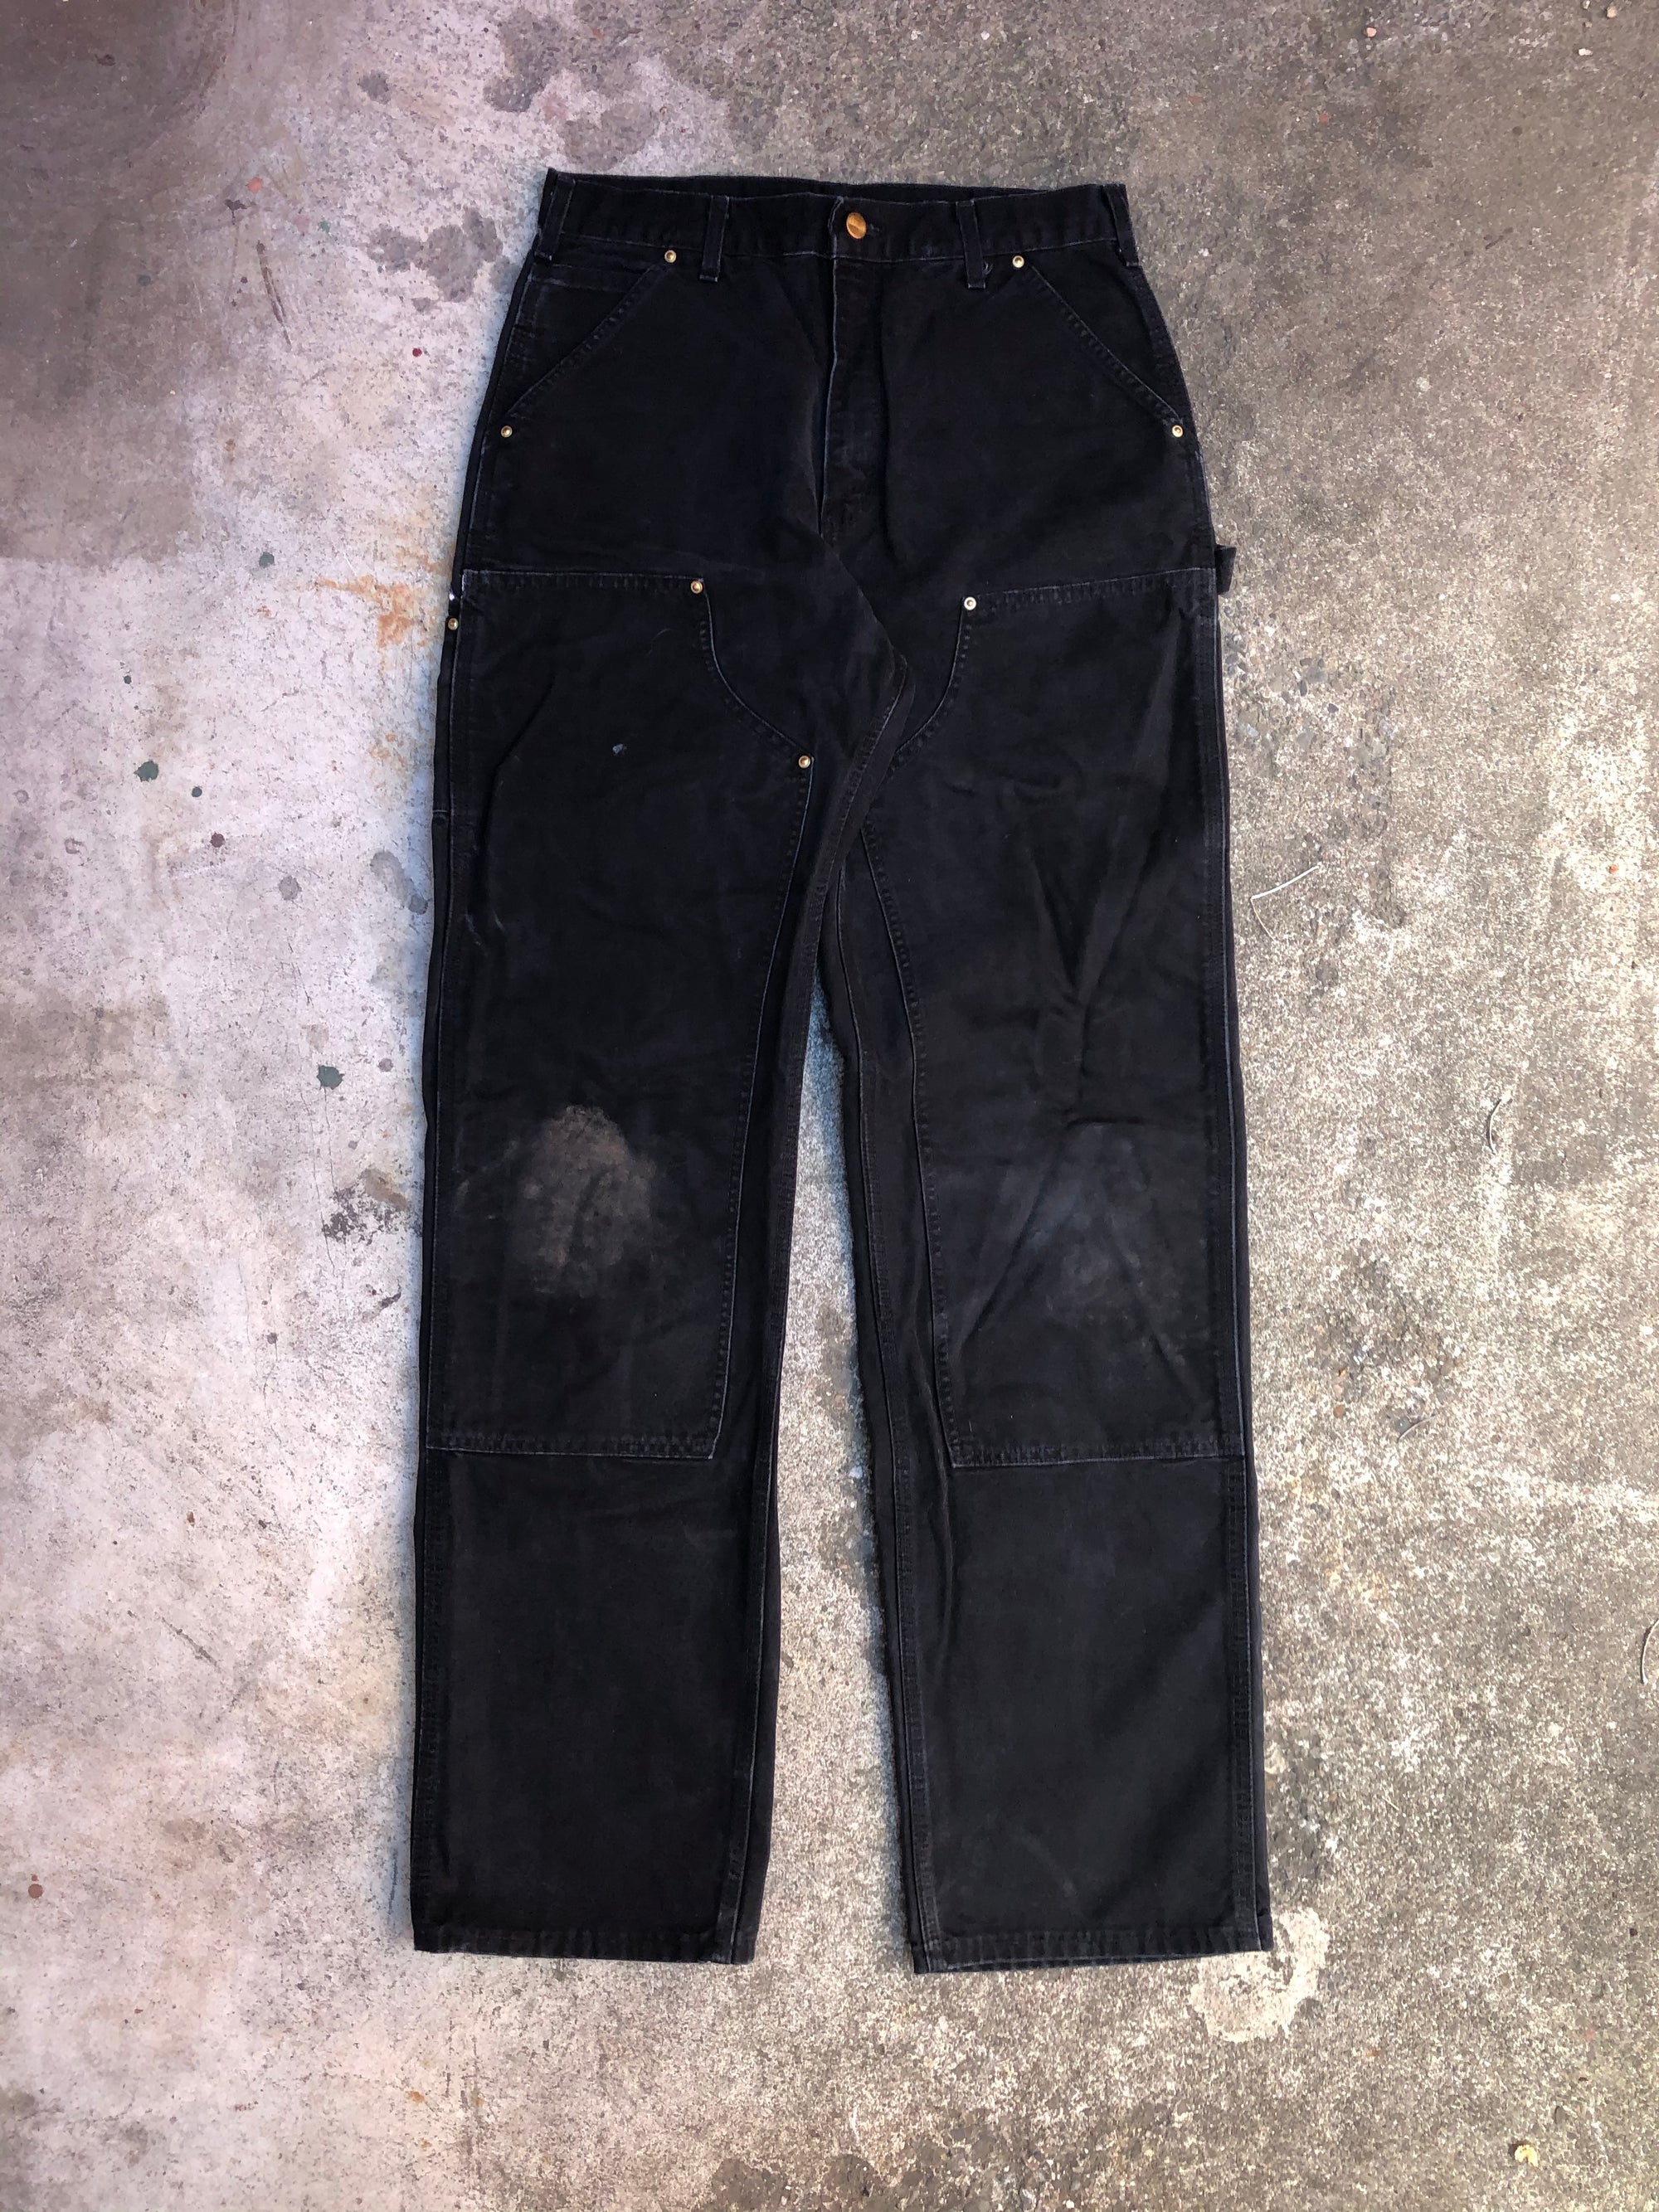 Carhartt B01 Black Double Front Knee Work Pants (32X34)